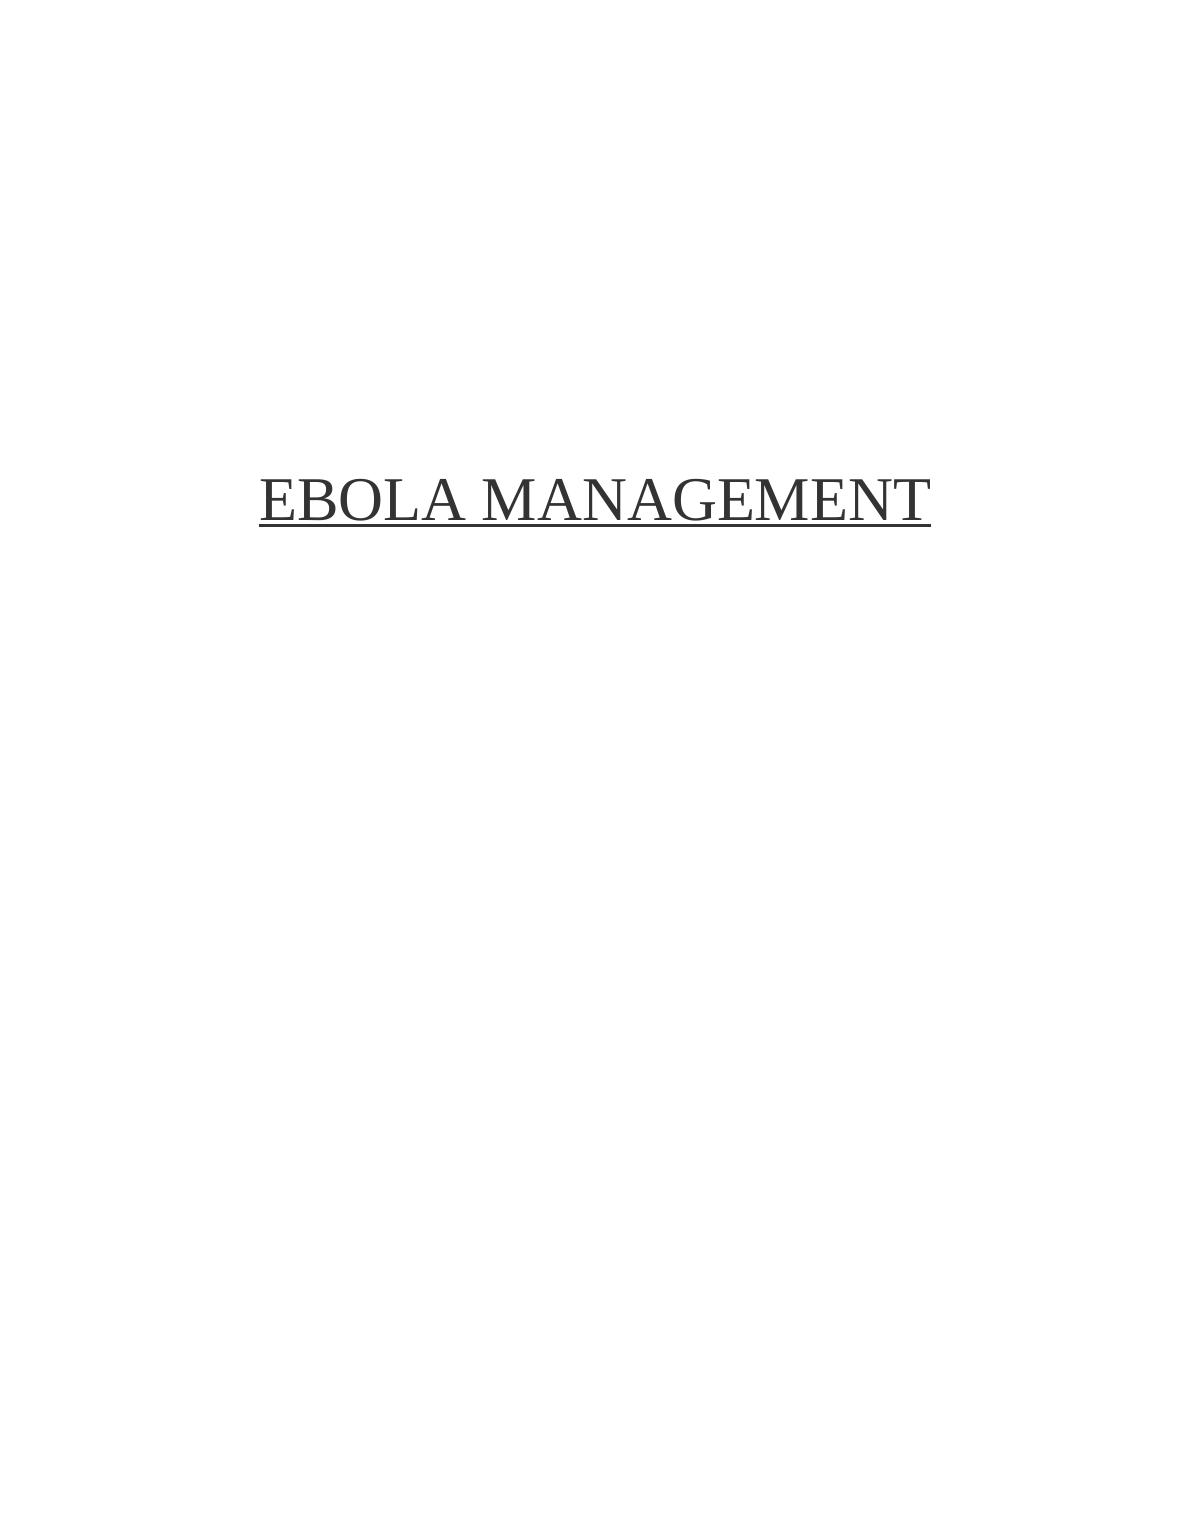 Article on Ebola Management_1